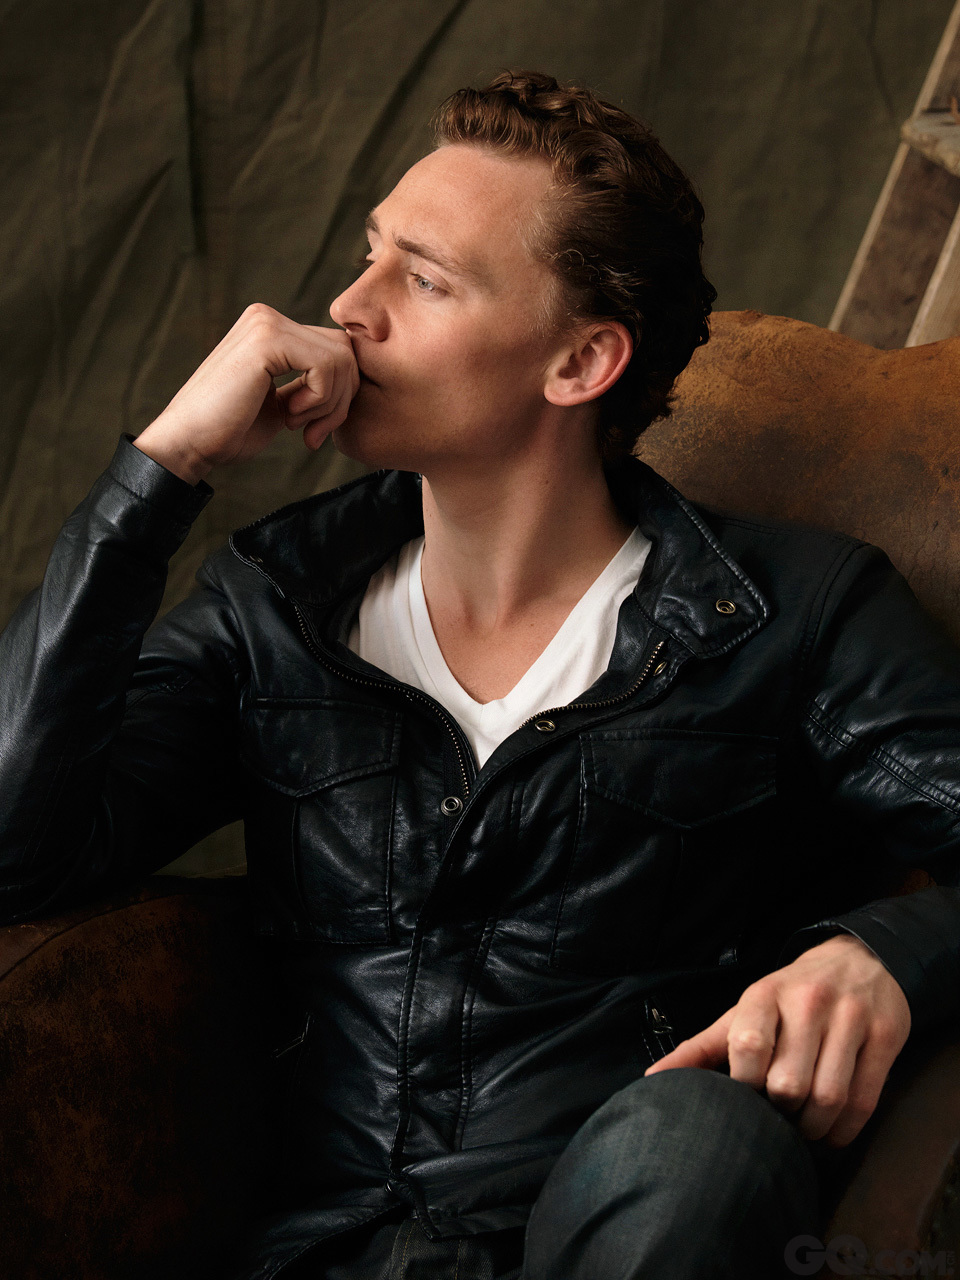 Tom Hiddleston，英文的姓读快点音译过来就是“抖森”，如果不怕咬到舌头的话可以试试读一下，这个称号他本人也知道了。《复仇者联盟》真正的赢家是反派洛基，“抖森”从此红遍全球!